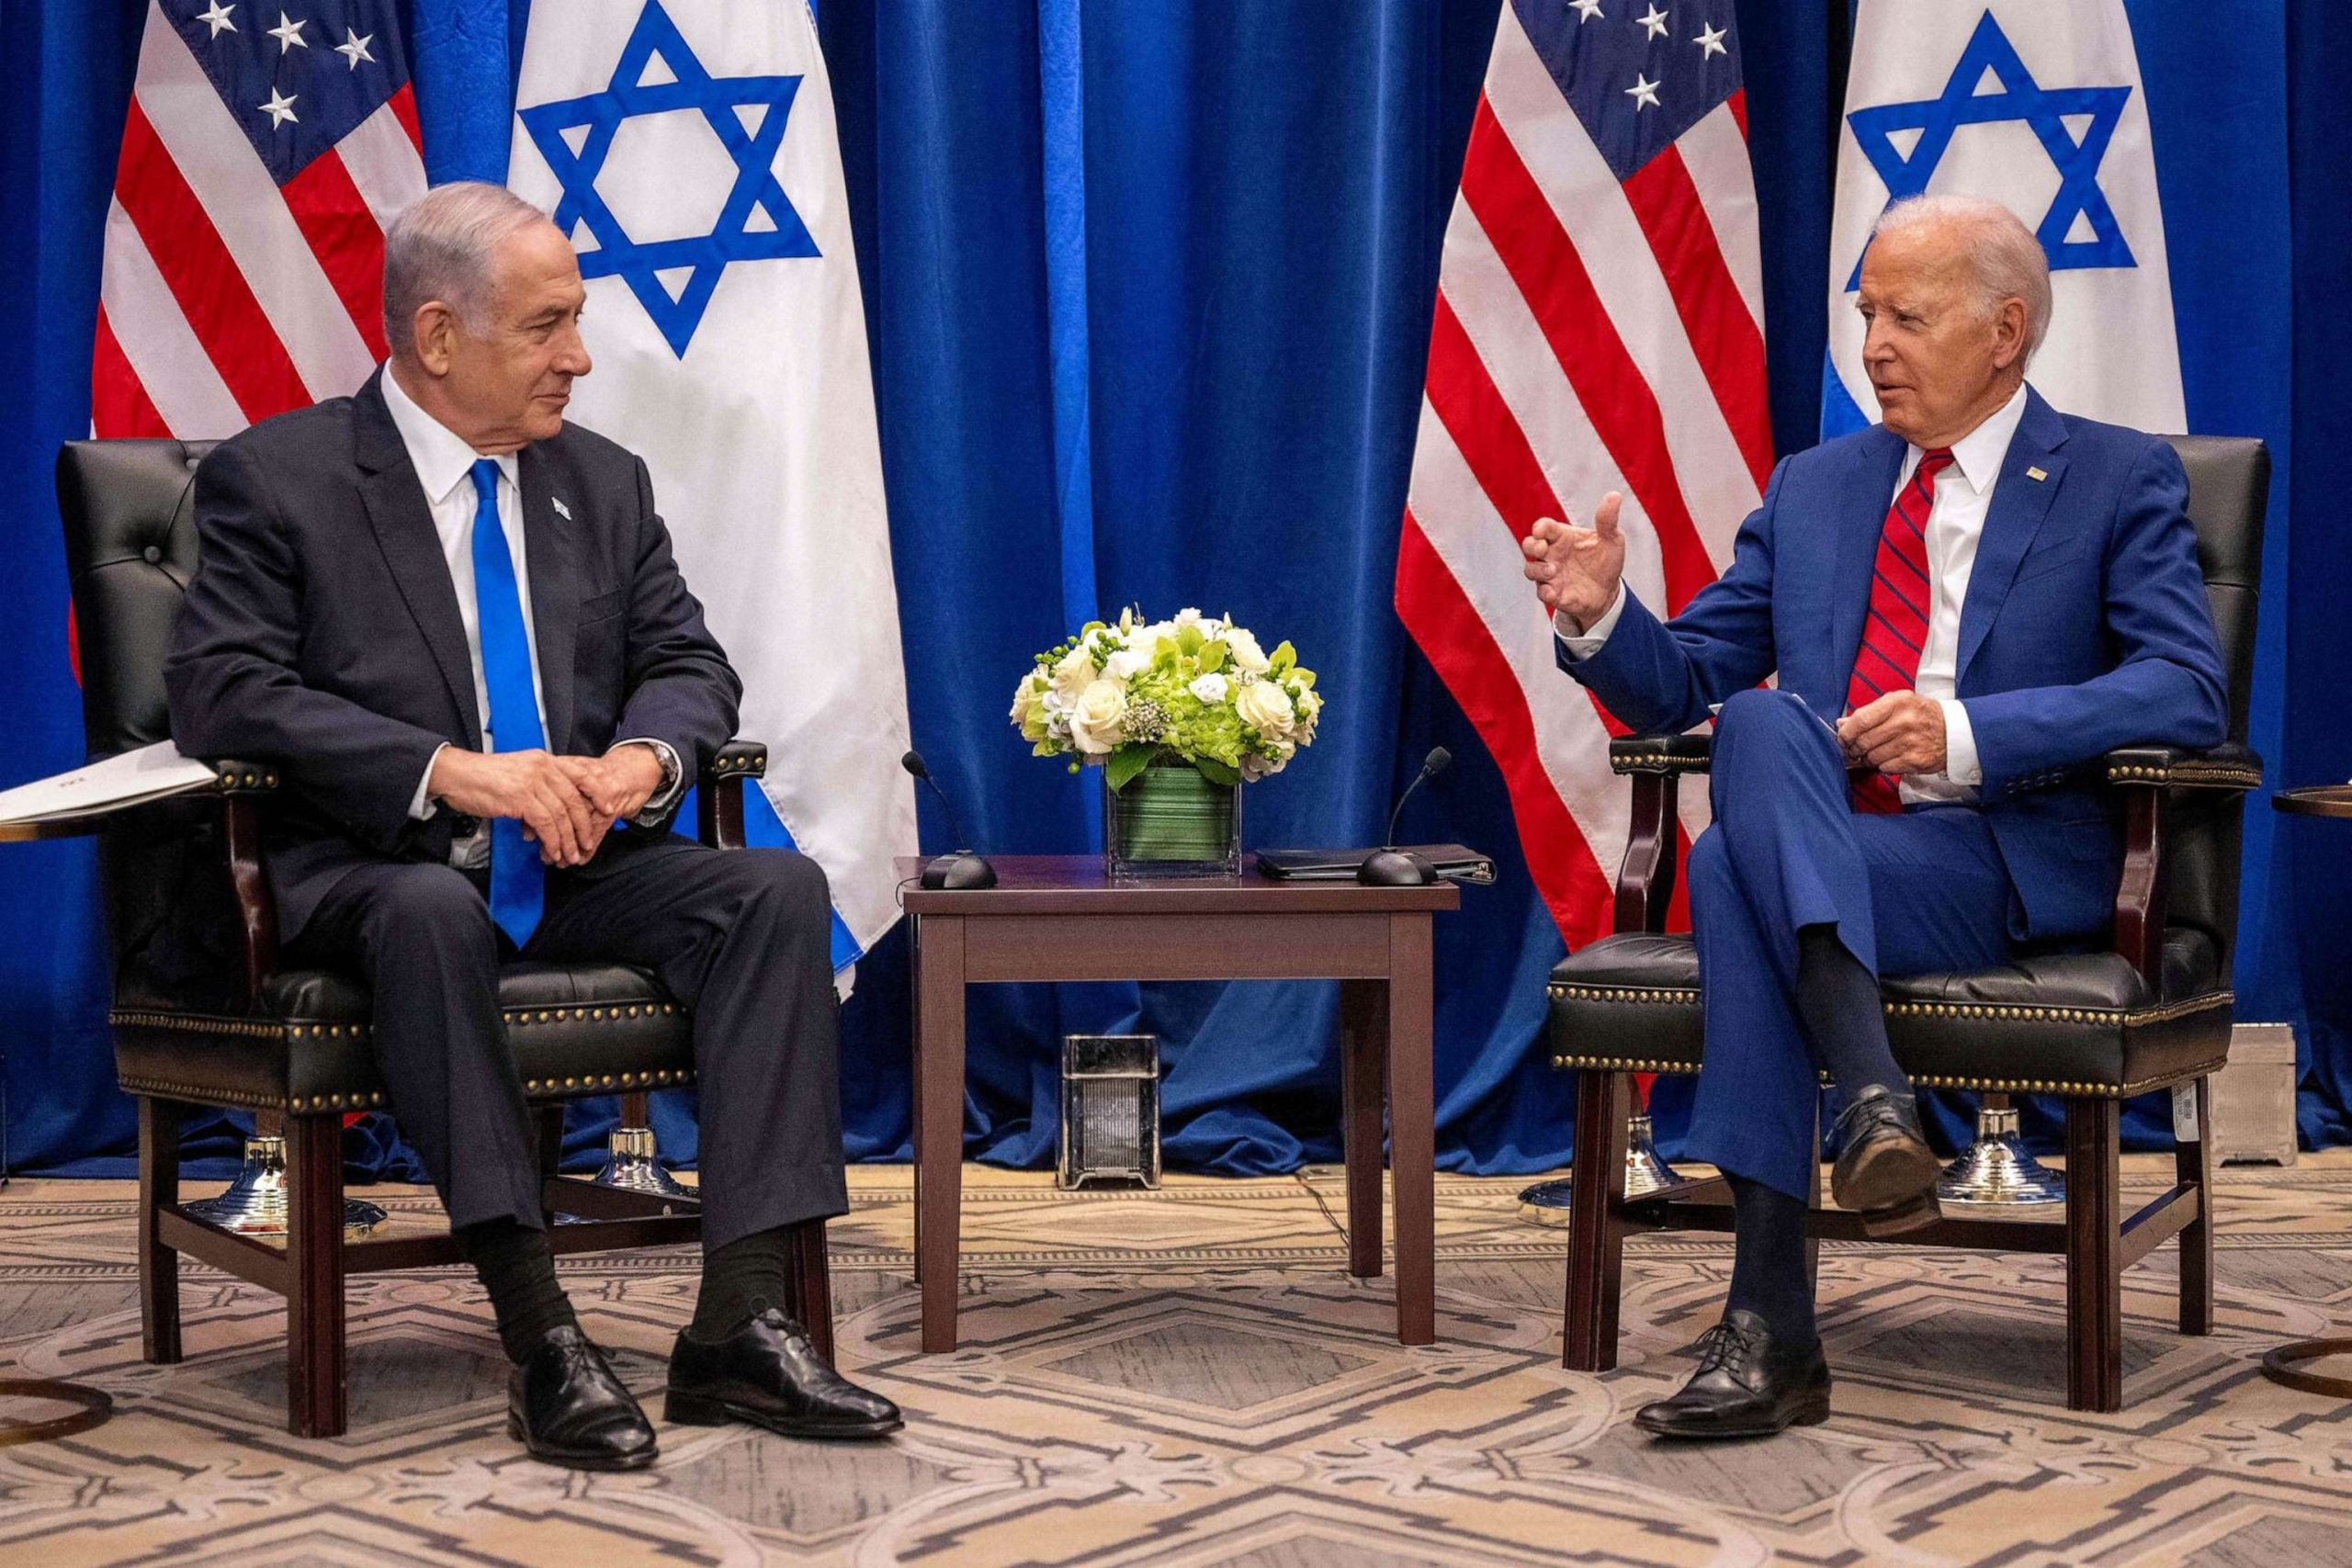 Meeting between Biden and Netanyahu amidst tensions between US and Israel